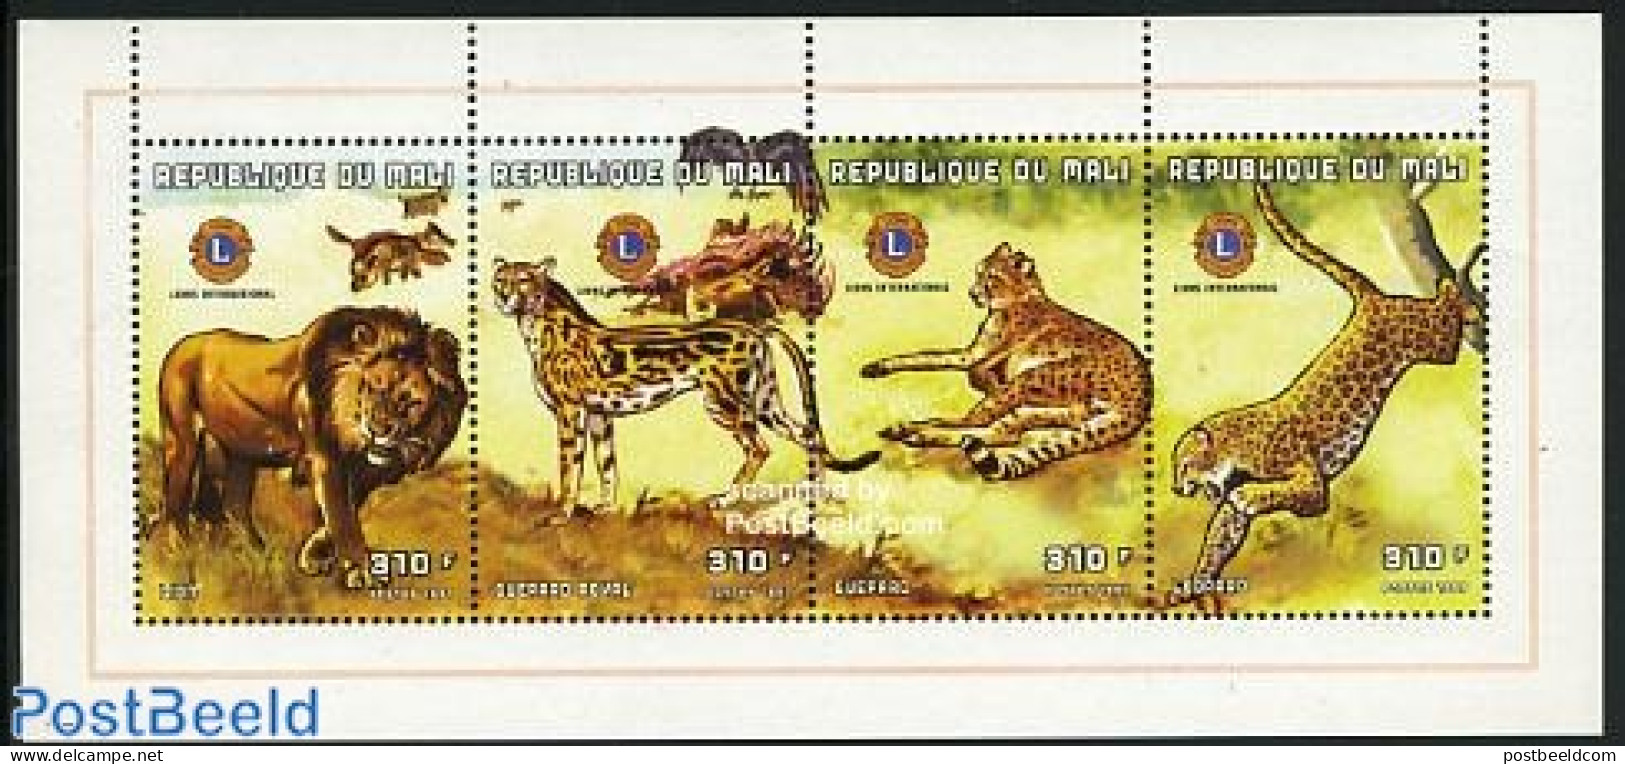 Mali 1998 Rotary, Lions International, Fauna 4v M/s (4x310F), Mint NH, Nature - Various - Cat Family - Lions Club - Ro.. - Rotary Club